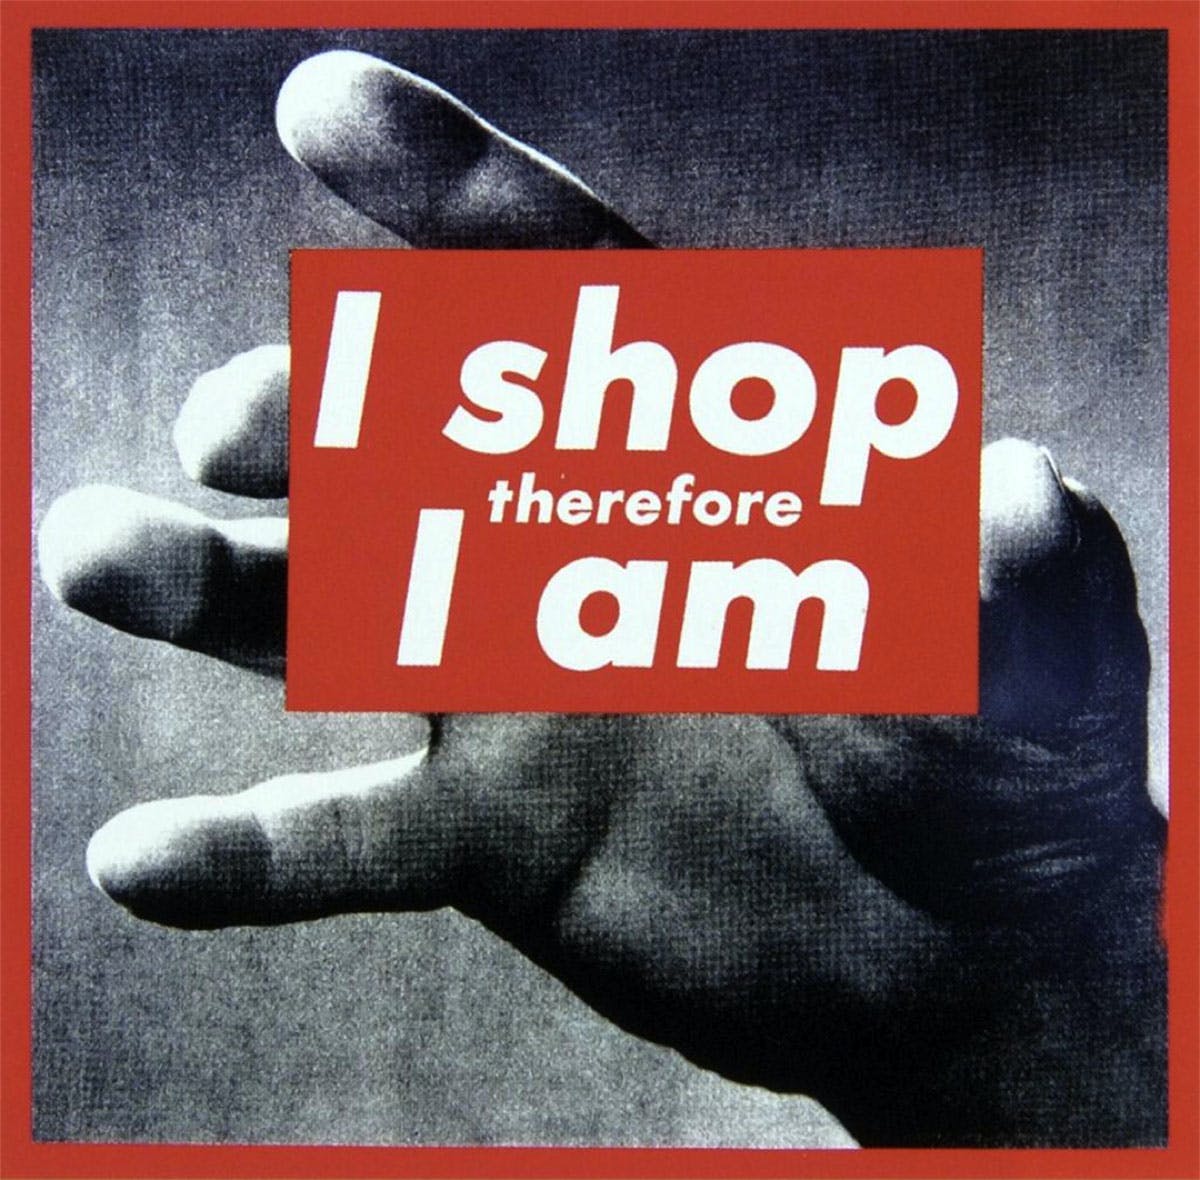 I Shop Therefore I Am, Barbara Kruger, 1987